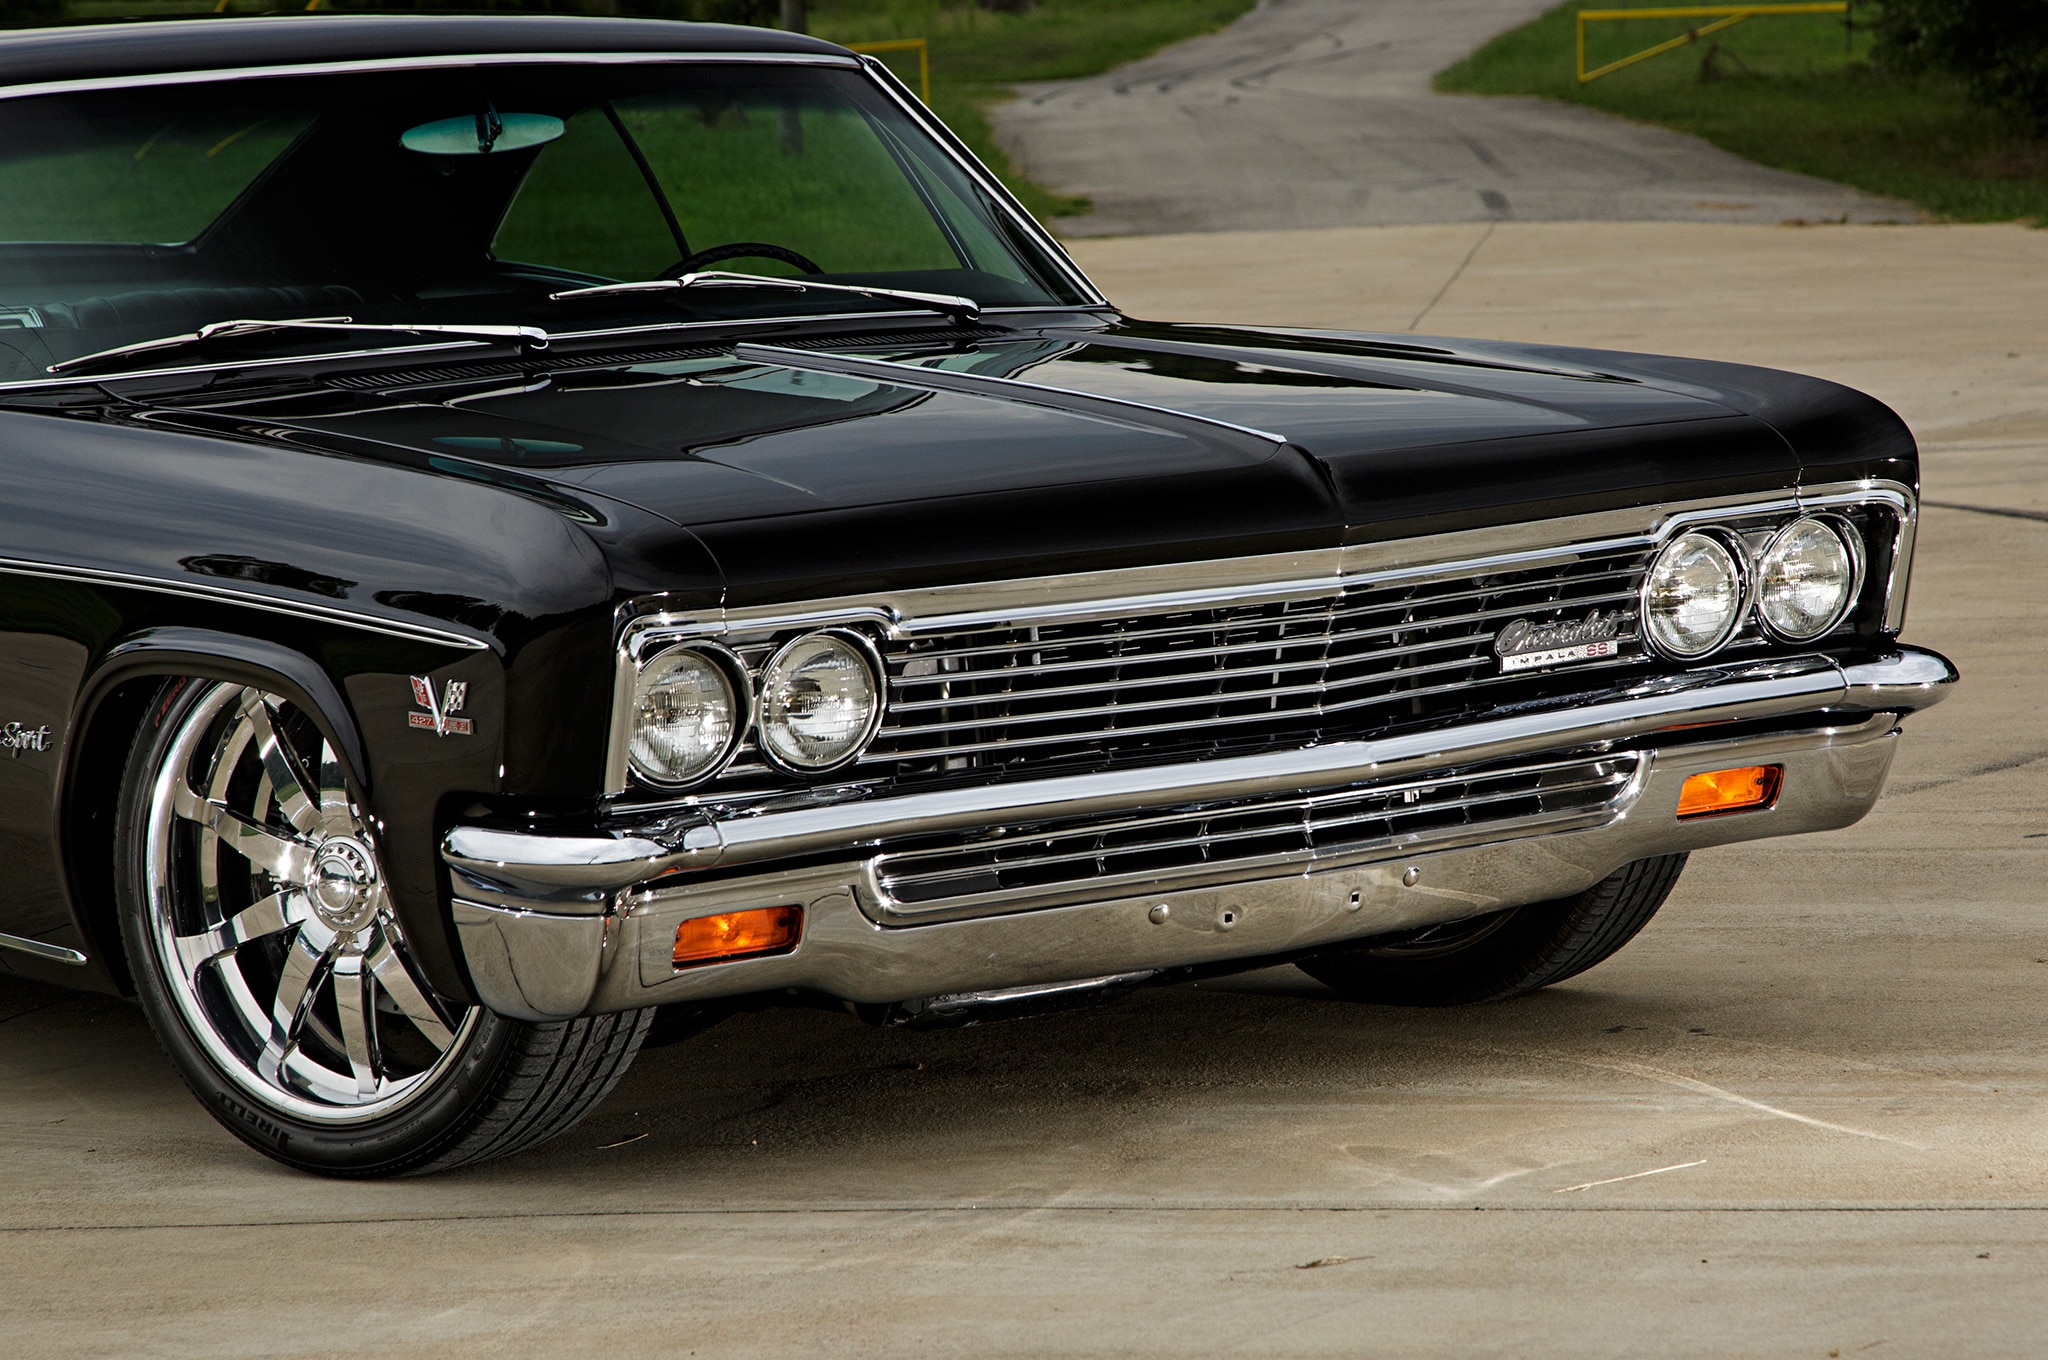 Chevrolet impala год. Шевроле Импала 67. Шевроле Импала 1967. Шевроле Импала 67 чёрная. Shavrale Tempala 1967.